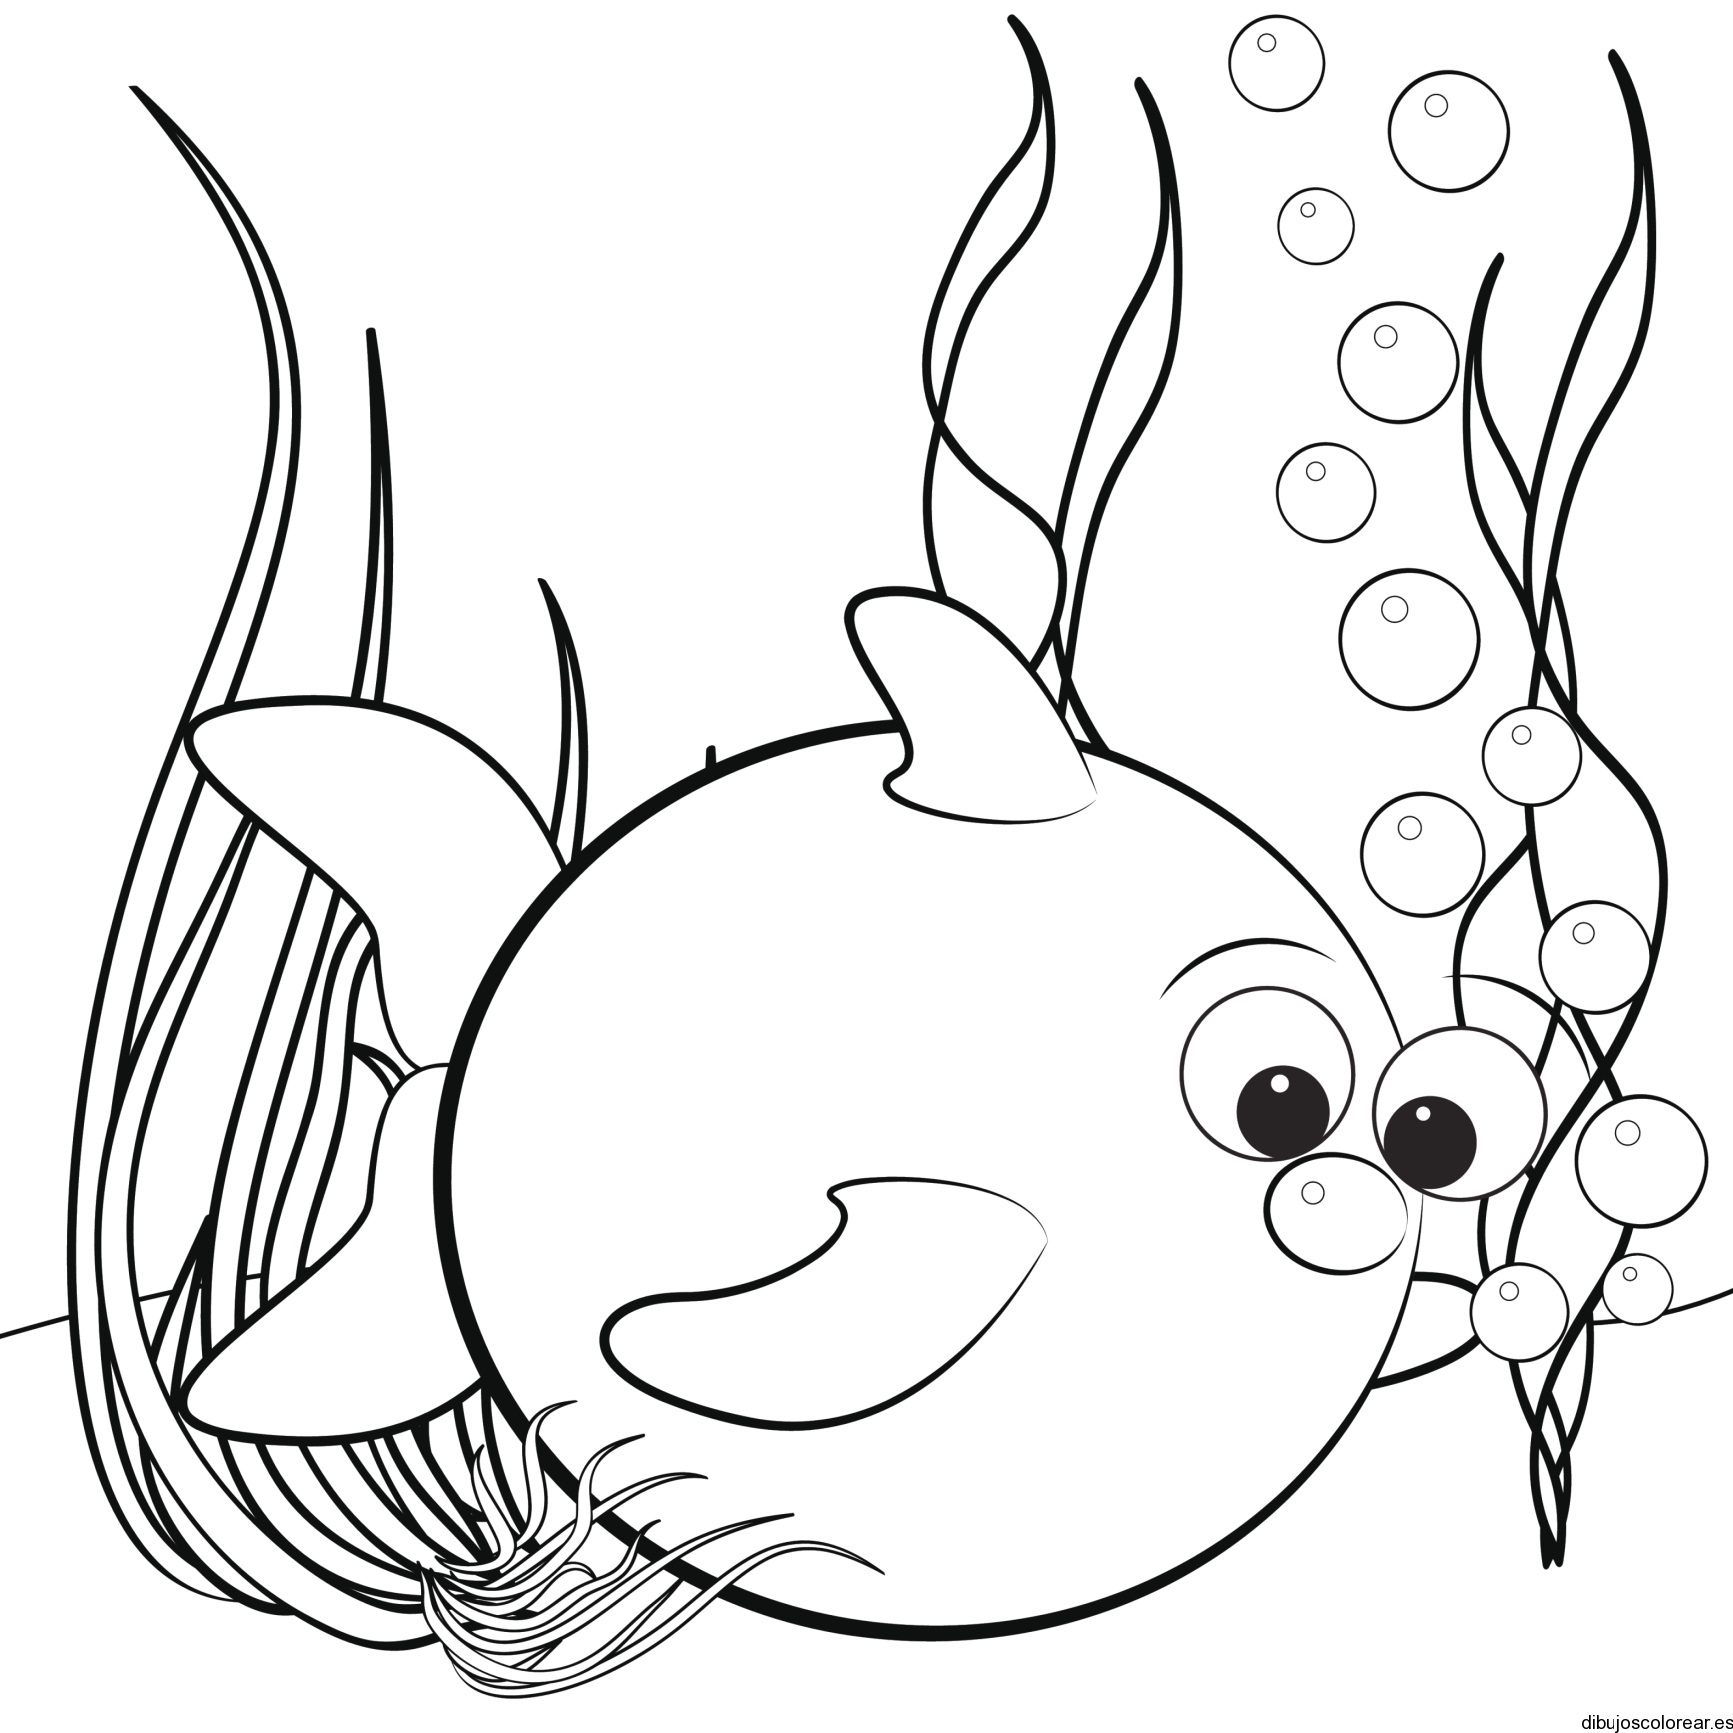 Dibujo de un pequeño pez globo